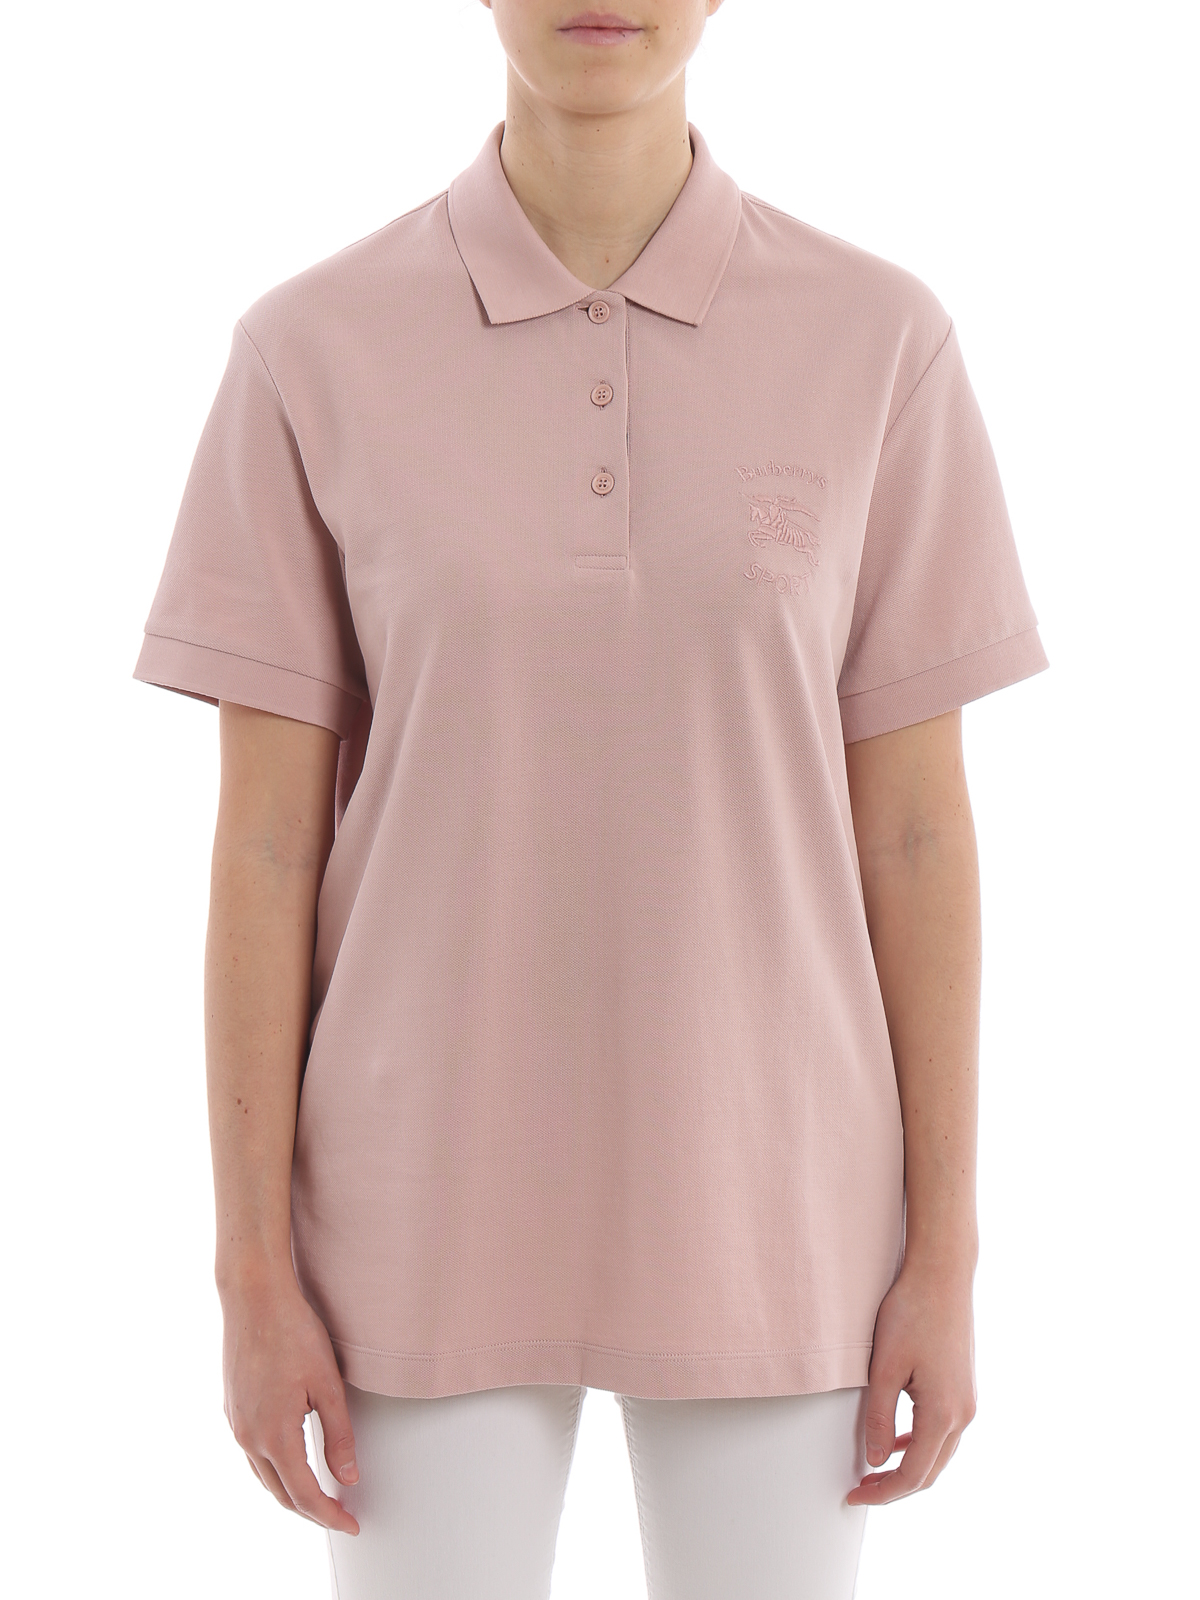 Polo shirts Burberry - Hartford pink polo shirt - iKRIX.com